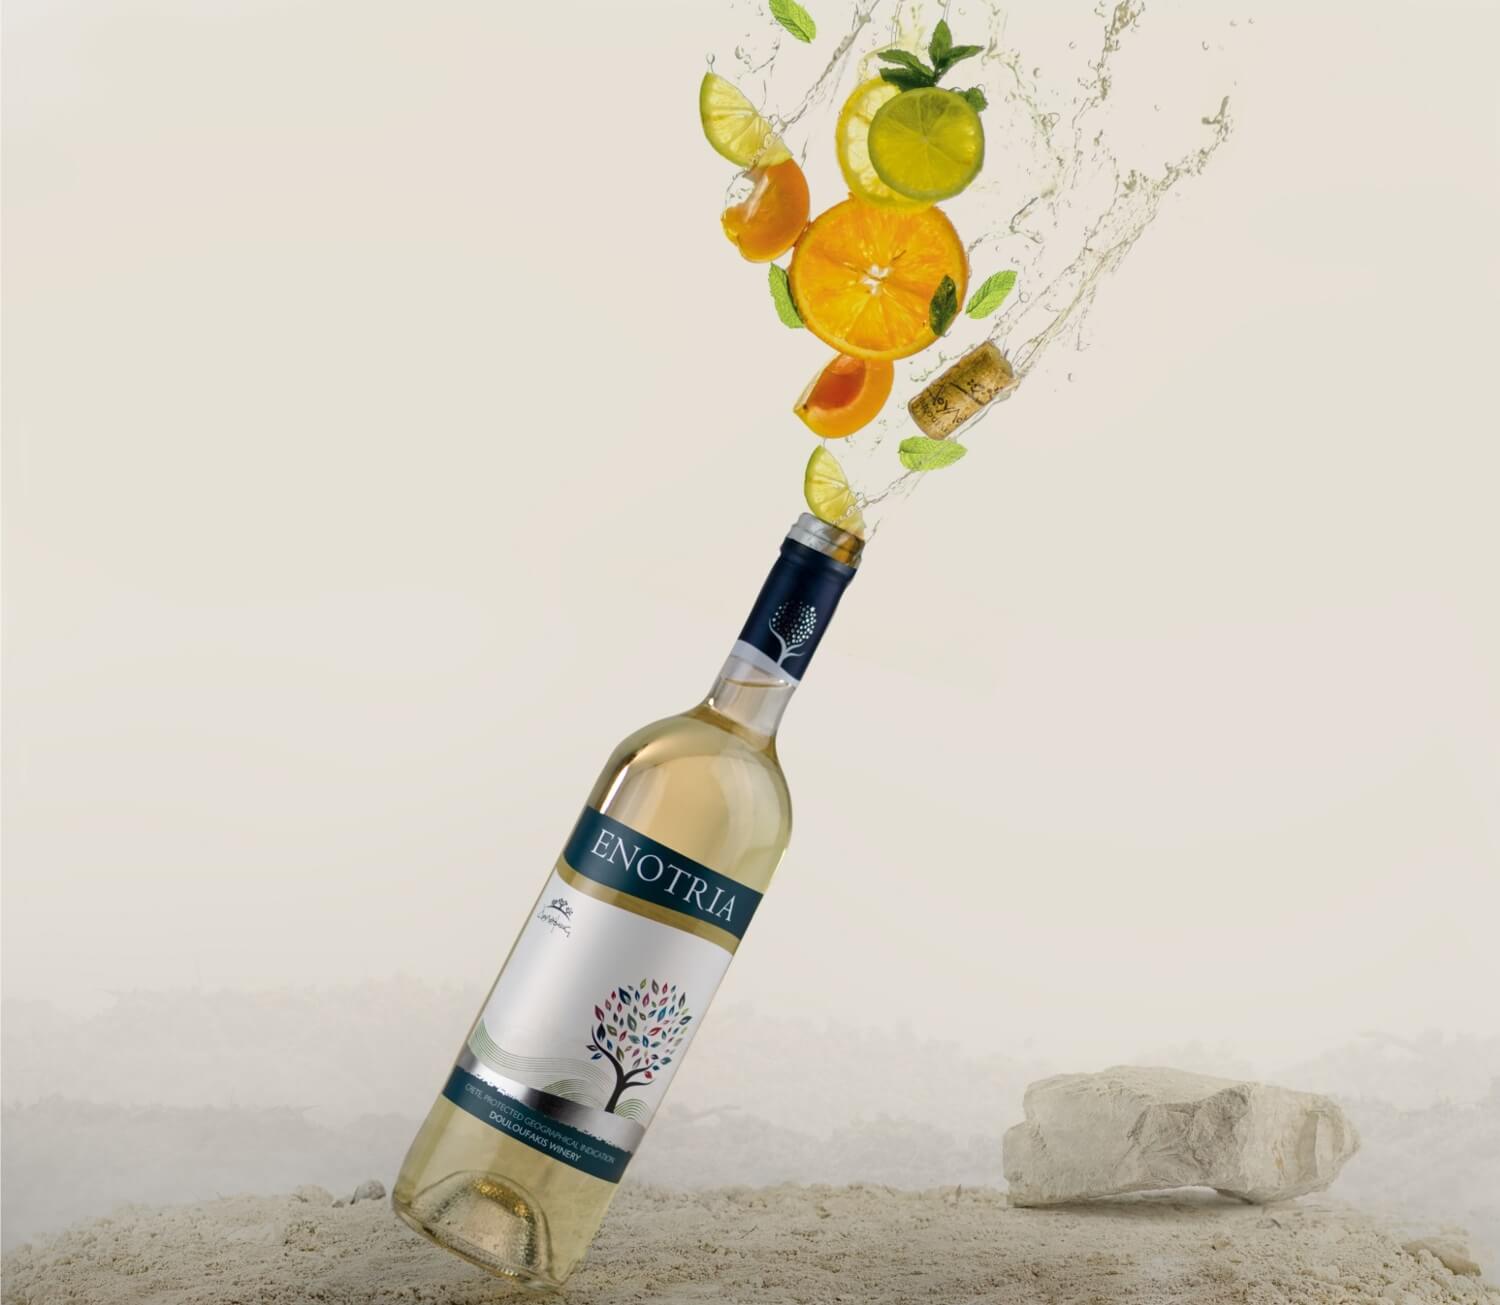 Douloufakis Vilana grape wine